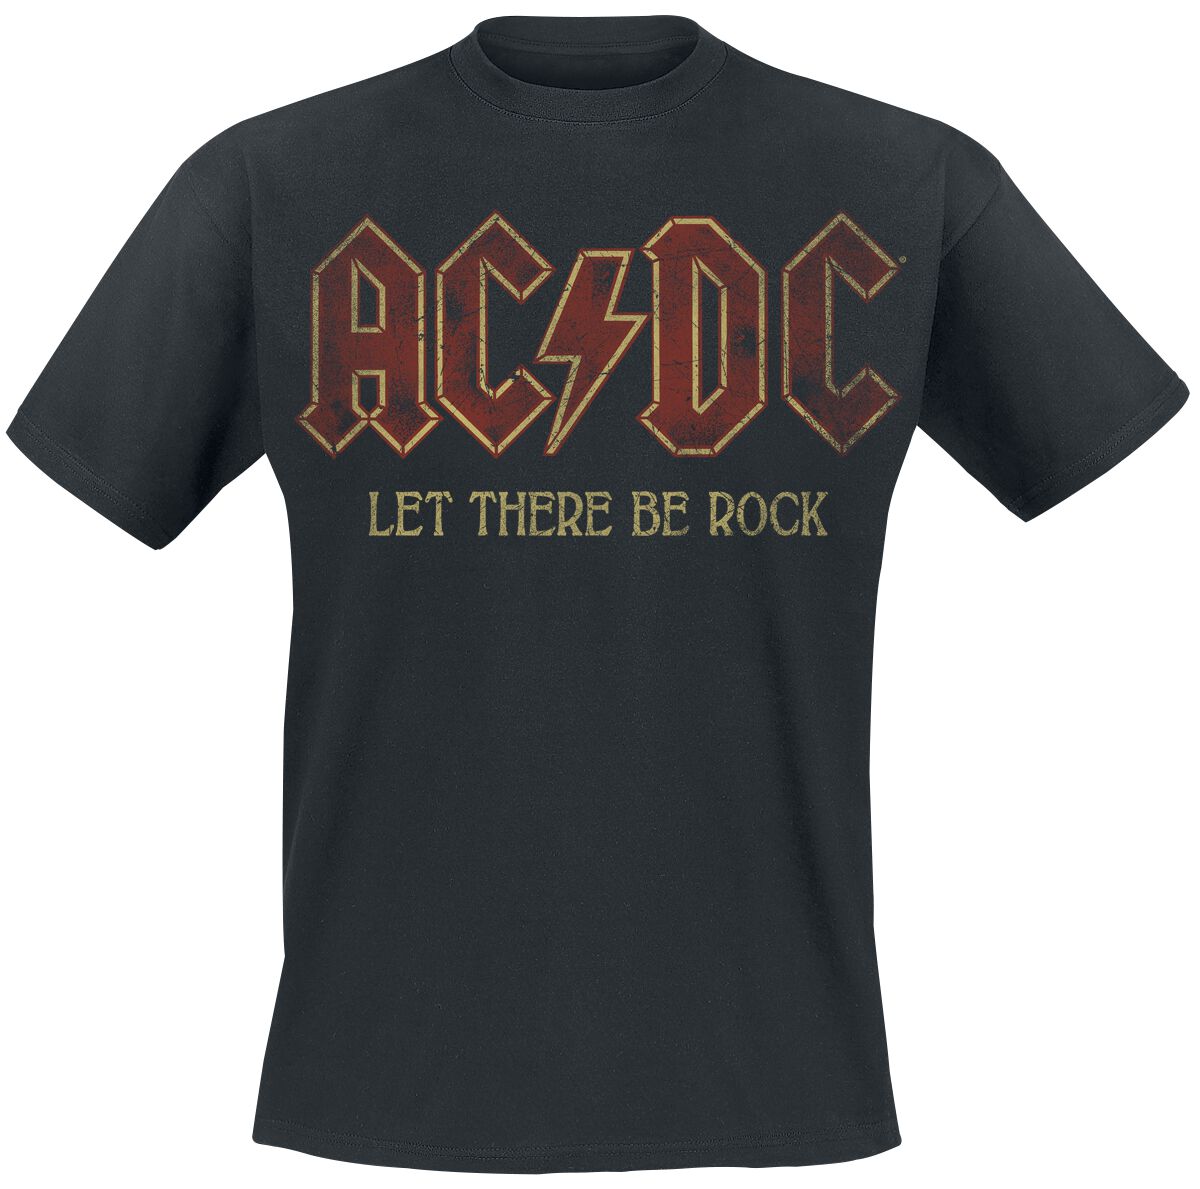 AC/DC Sounds Light Drums Guitar T-Shirt schwarz in S